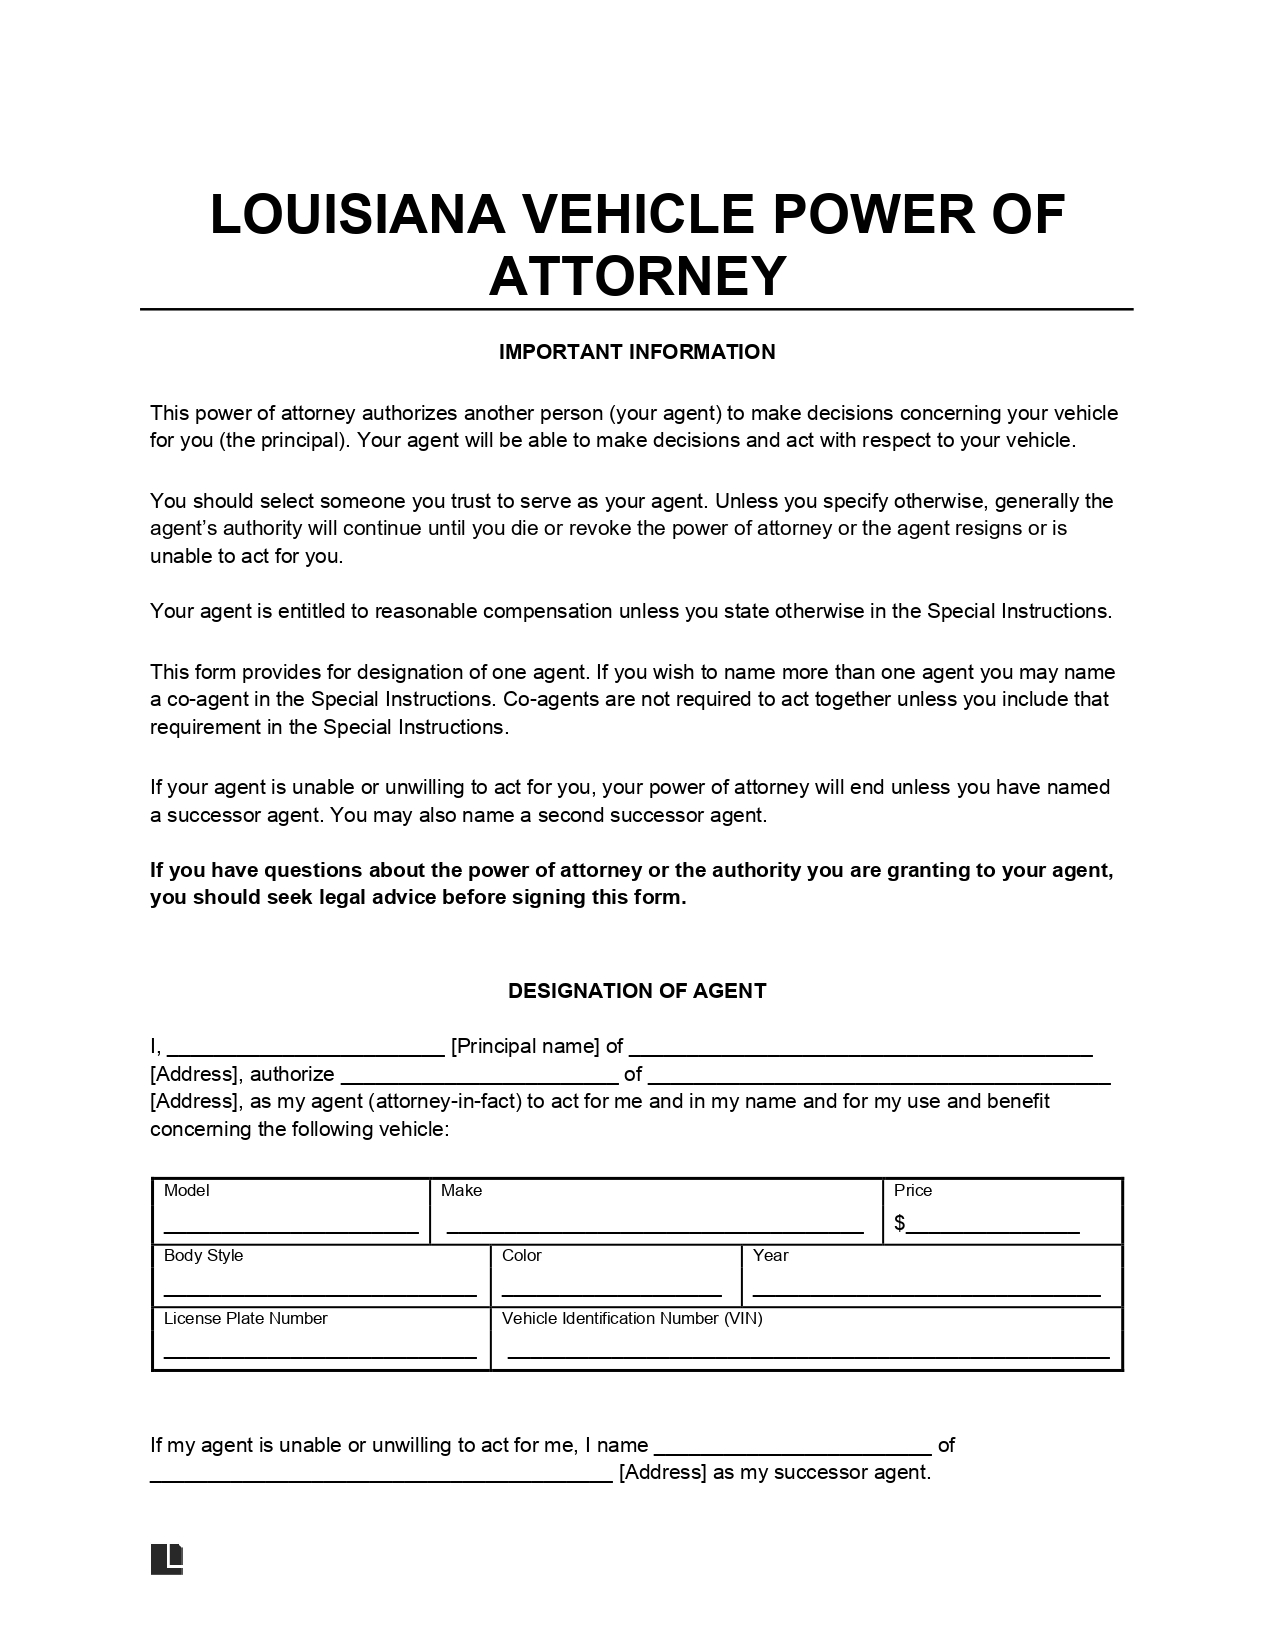 Louisiana Motor Vehicle Power of Attorney Form